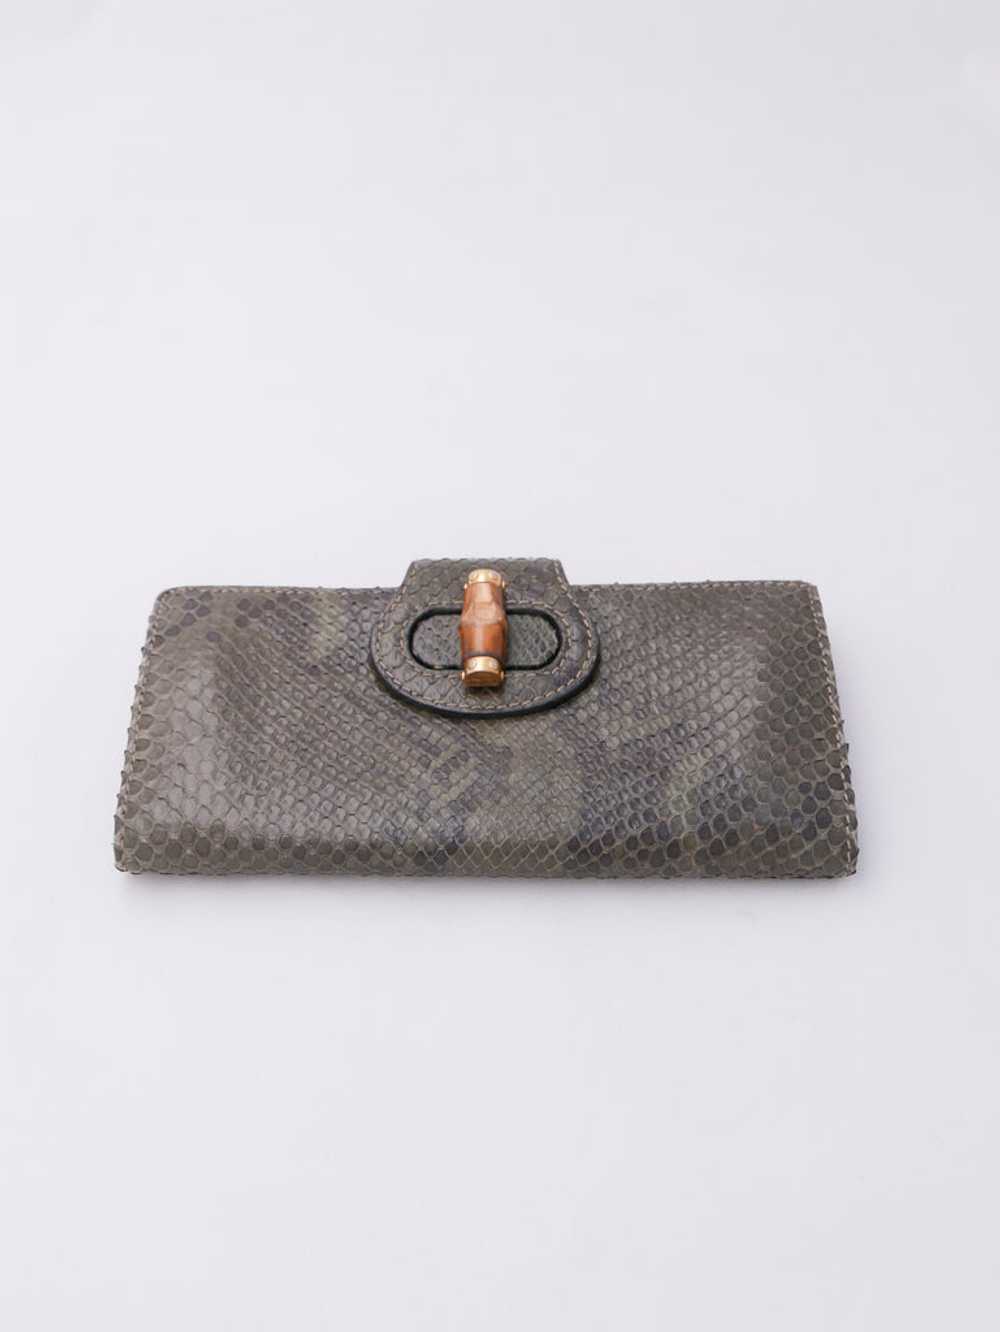 Gucci Python Clutch Wallet - image 5